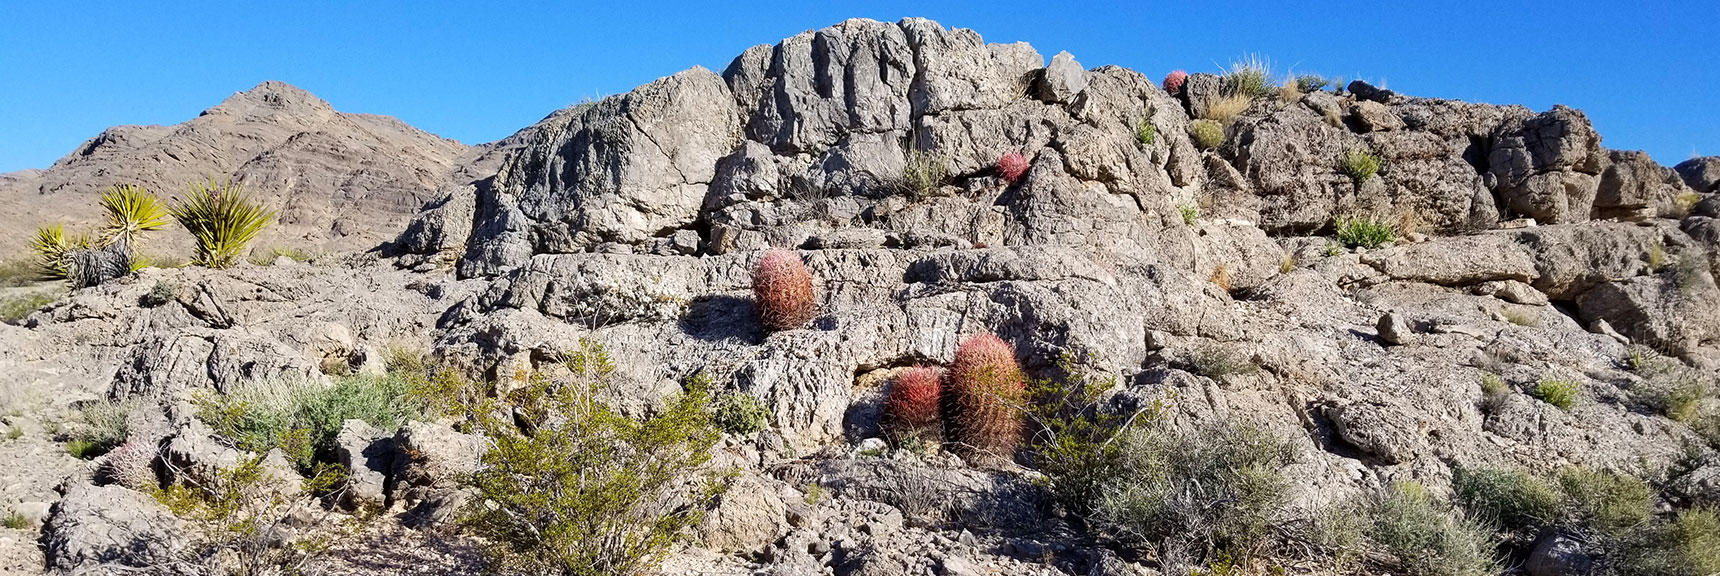 Cactus Rock Garden South of Gass Peak, Nevada